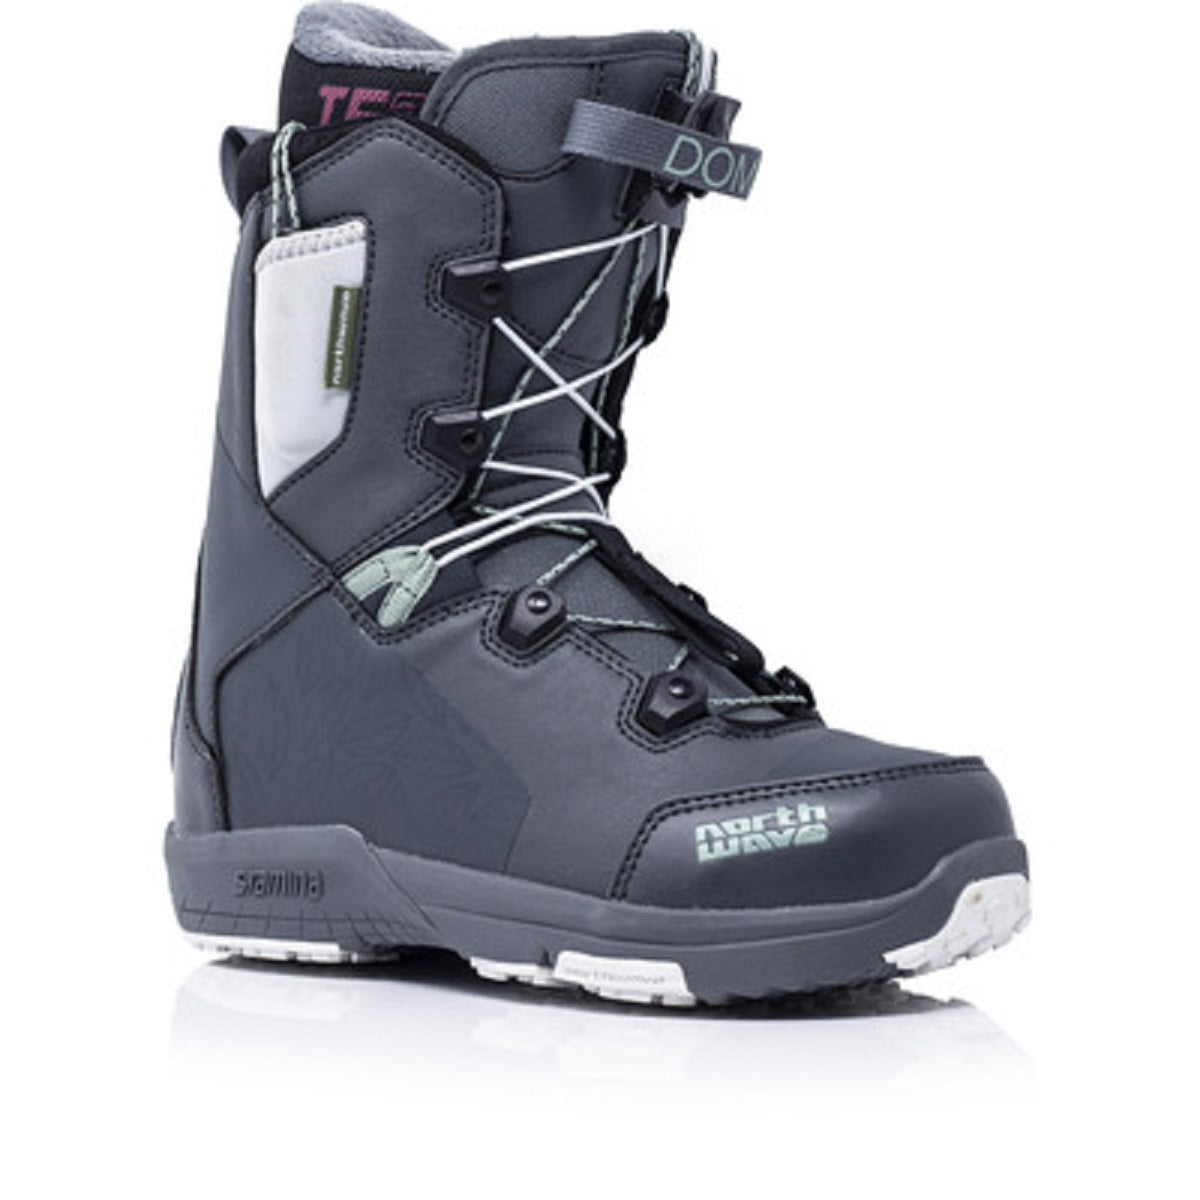 NorthWave Domino SL Snowboard Boot 2022